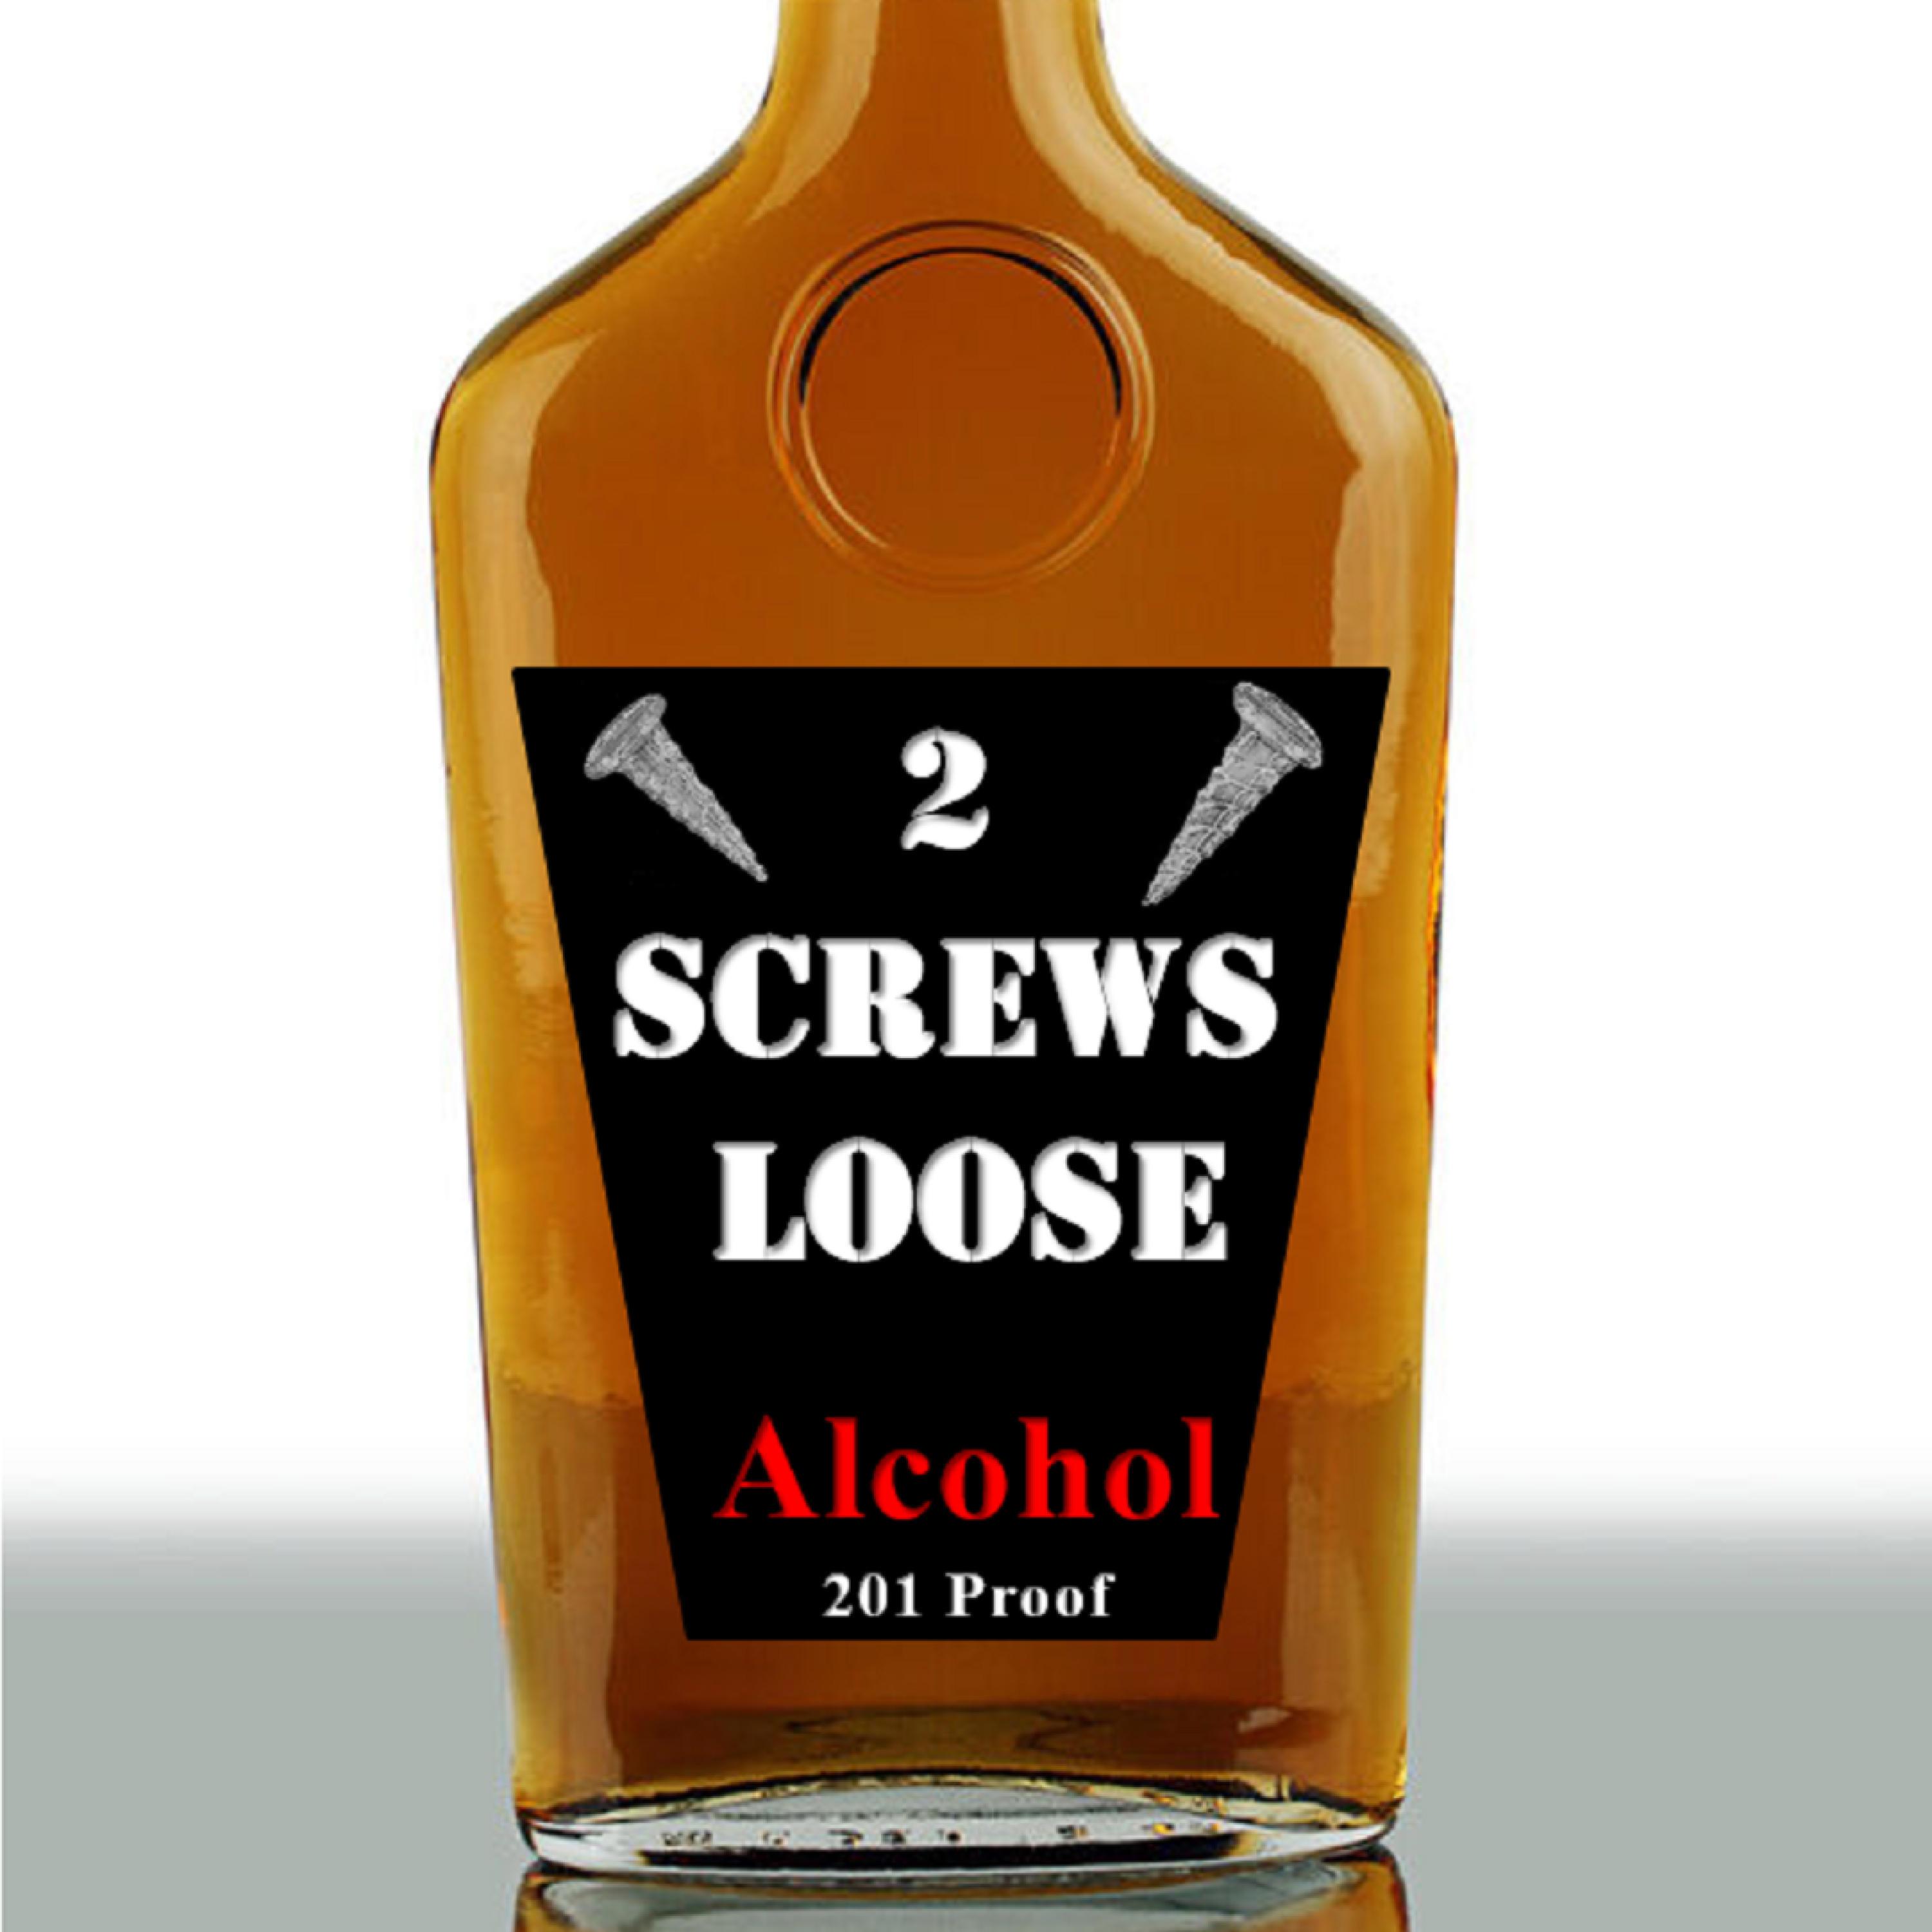 2 Screws Loose - Alcohol (feat. RobZ) (Radio Edit)